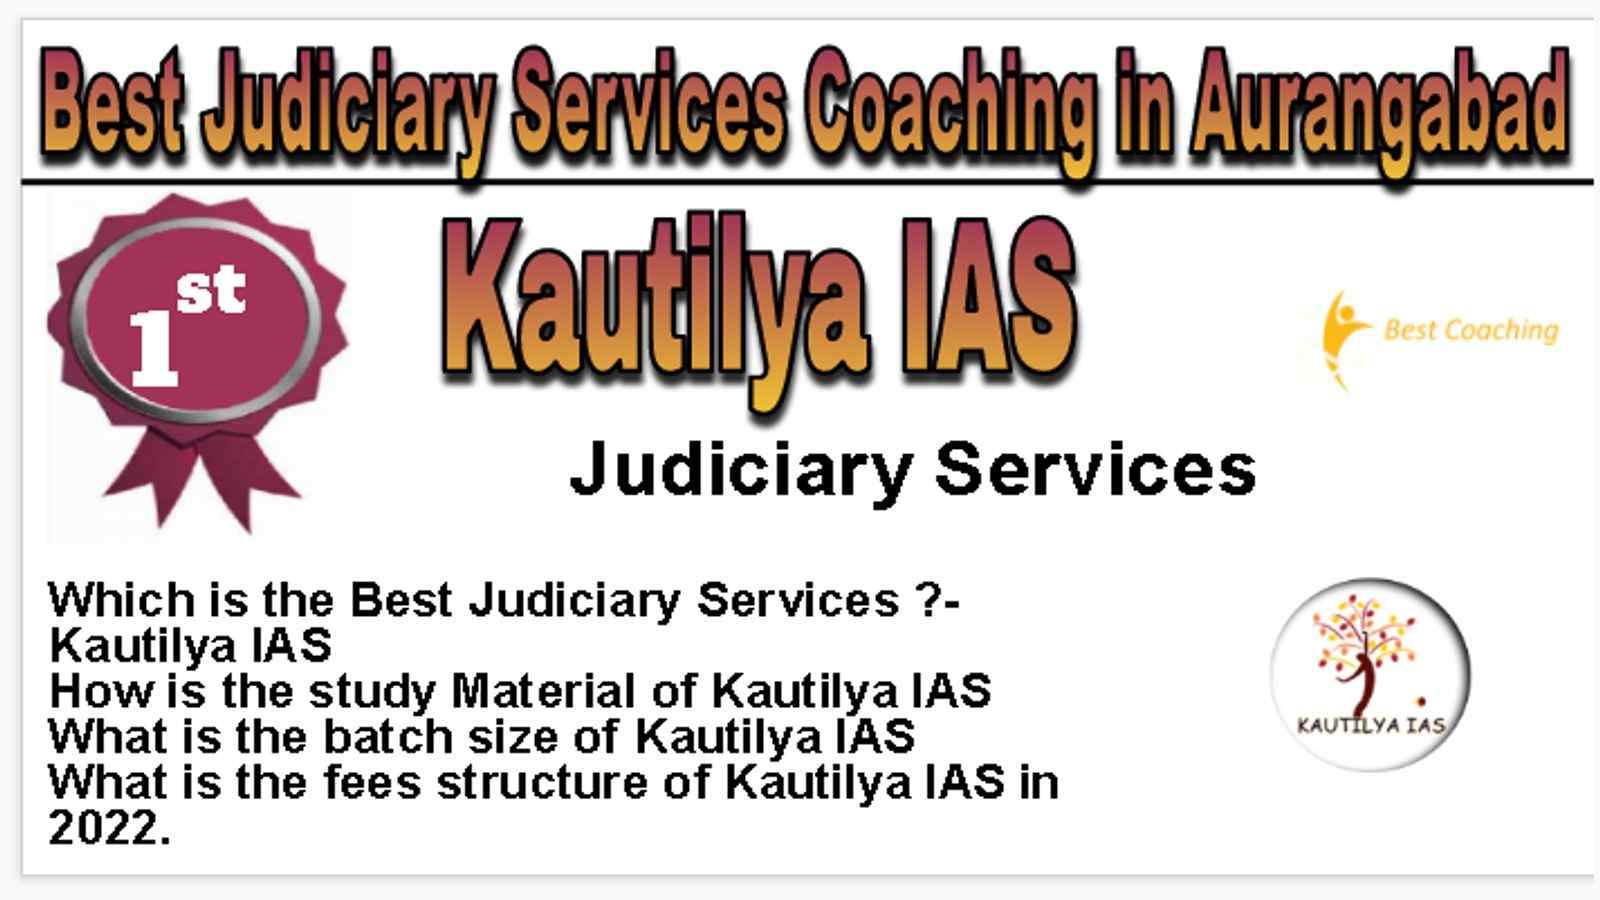 Rank 1 Best Judiciary Services Coaching in Aurangabad